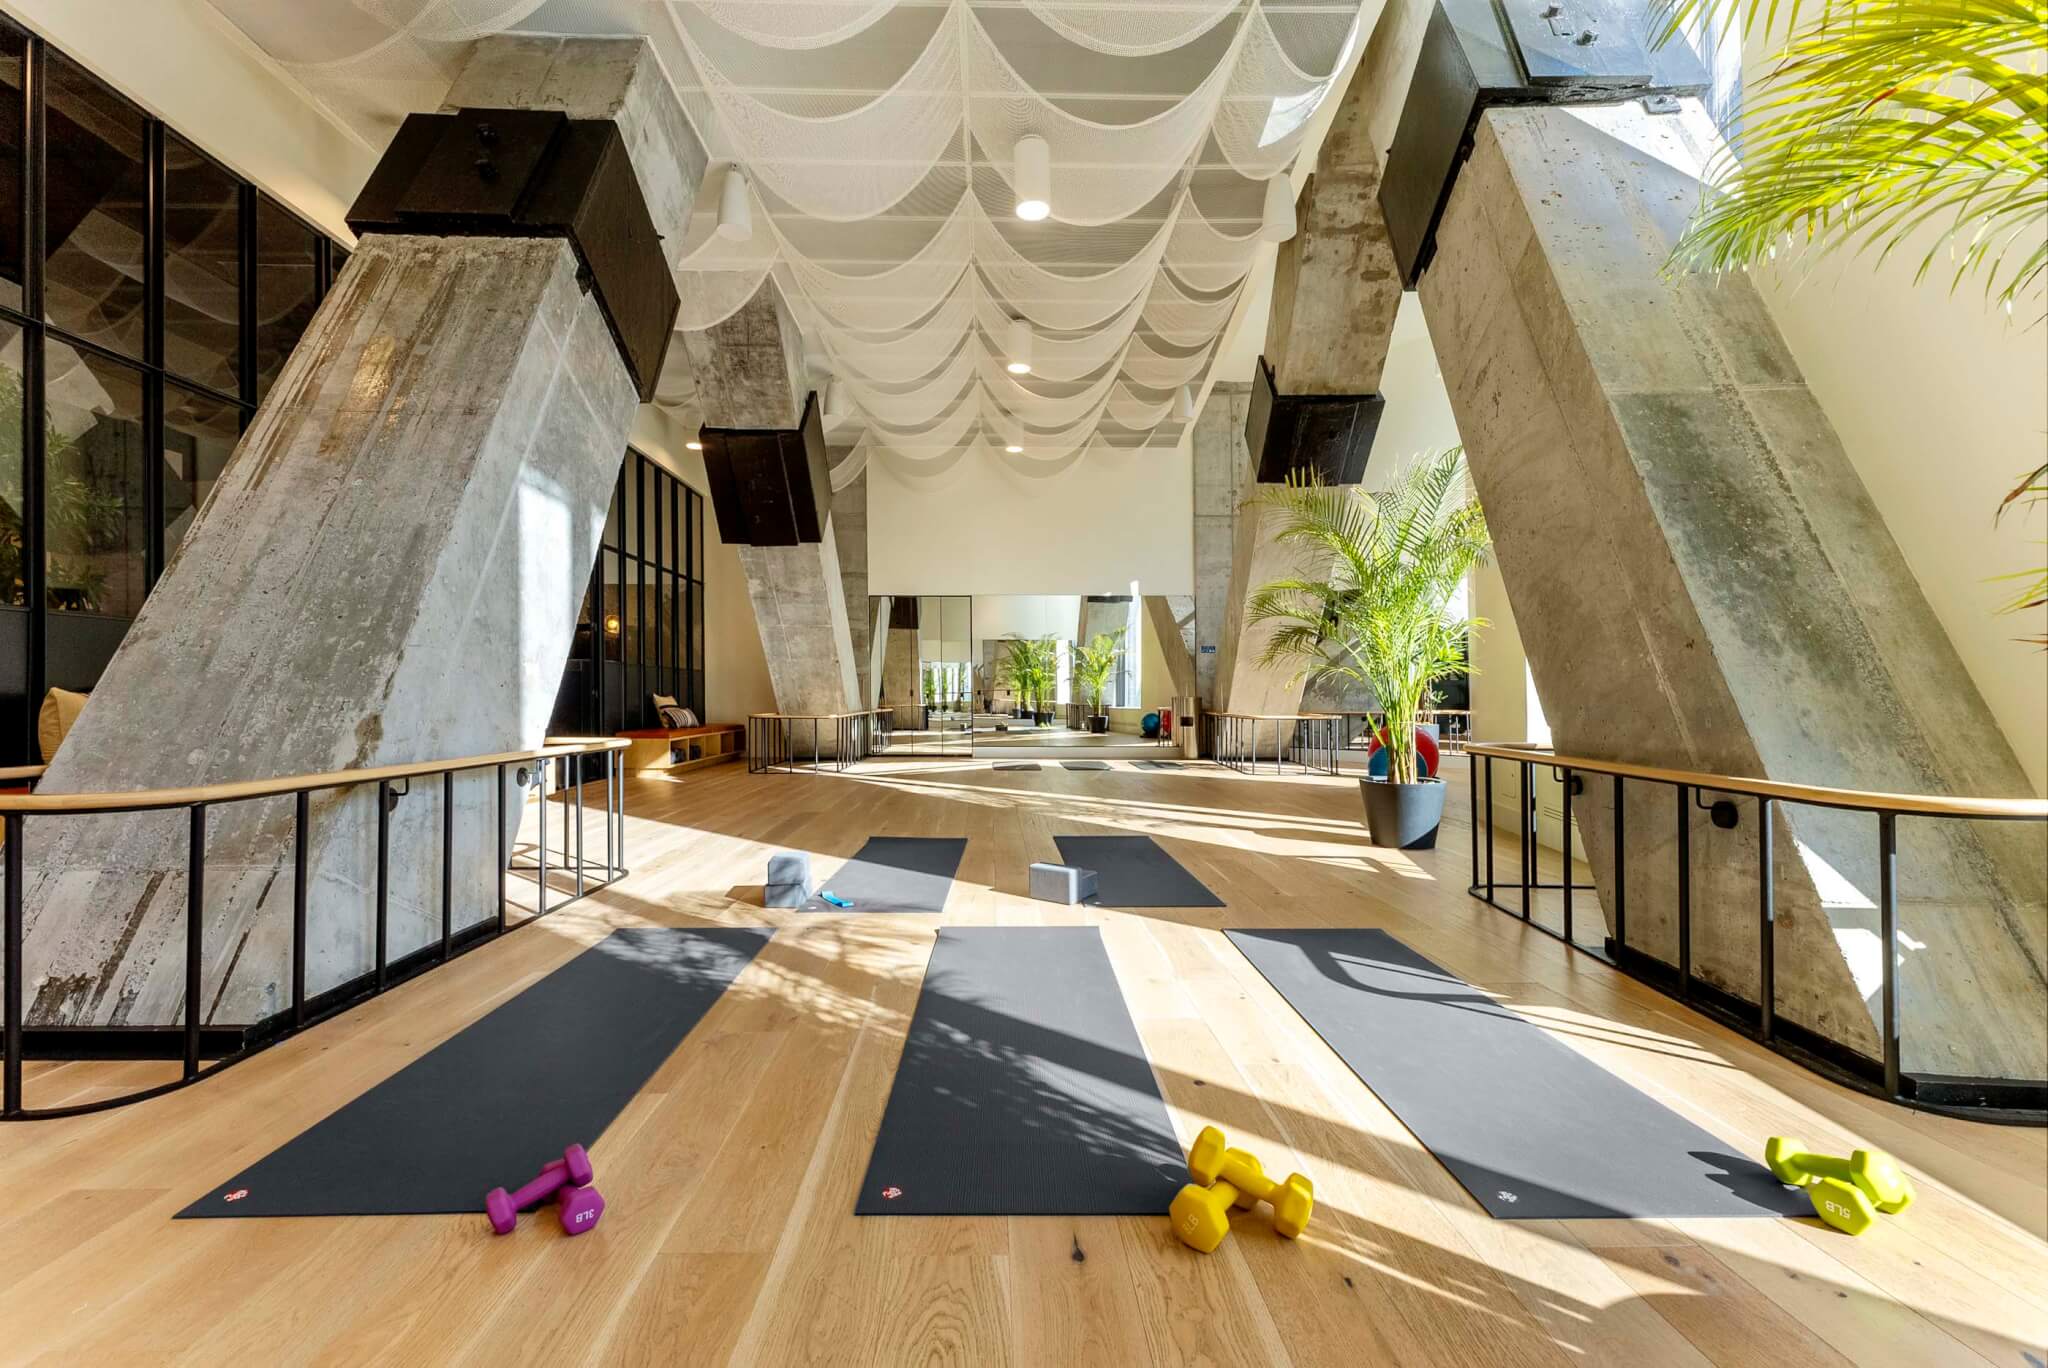 yoga studio with wood floor and mats set up